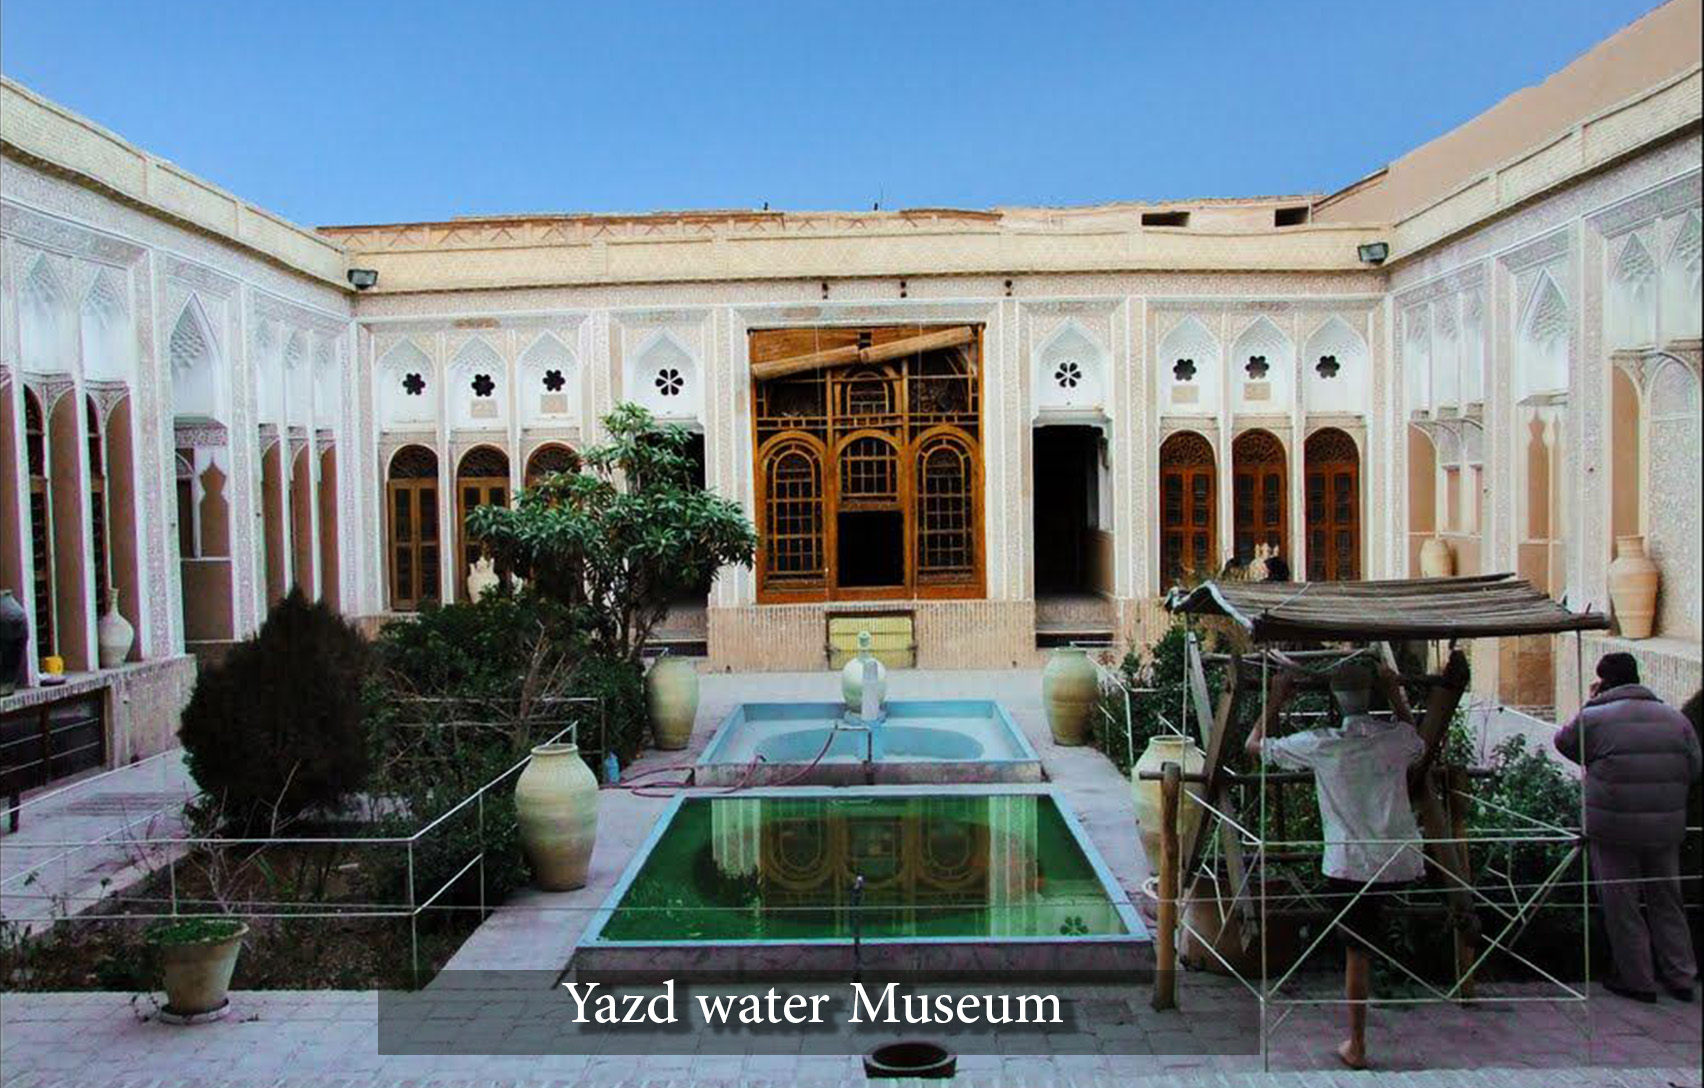 Yazd water Museum